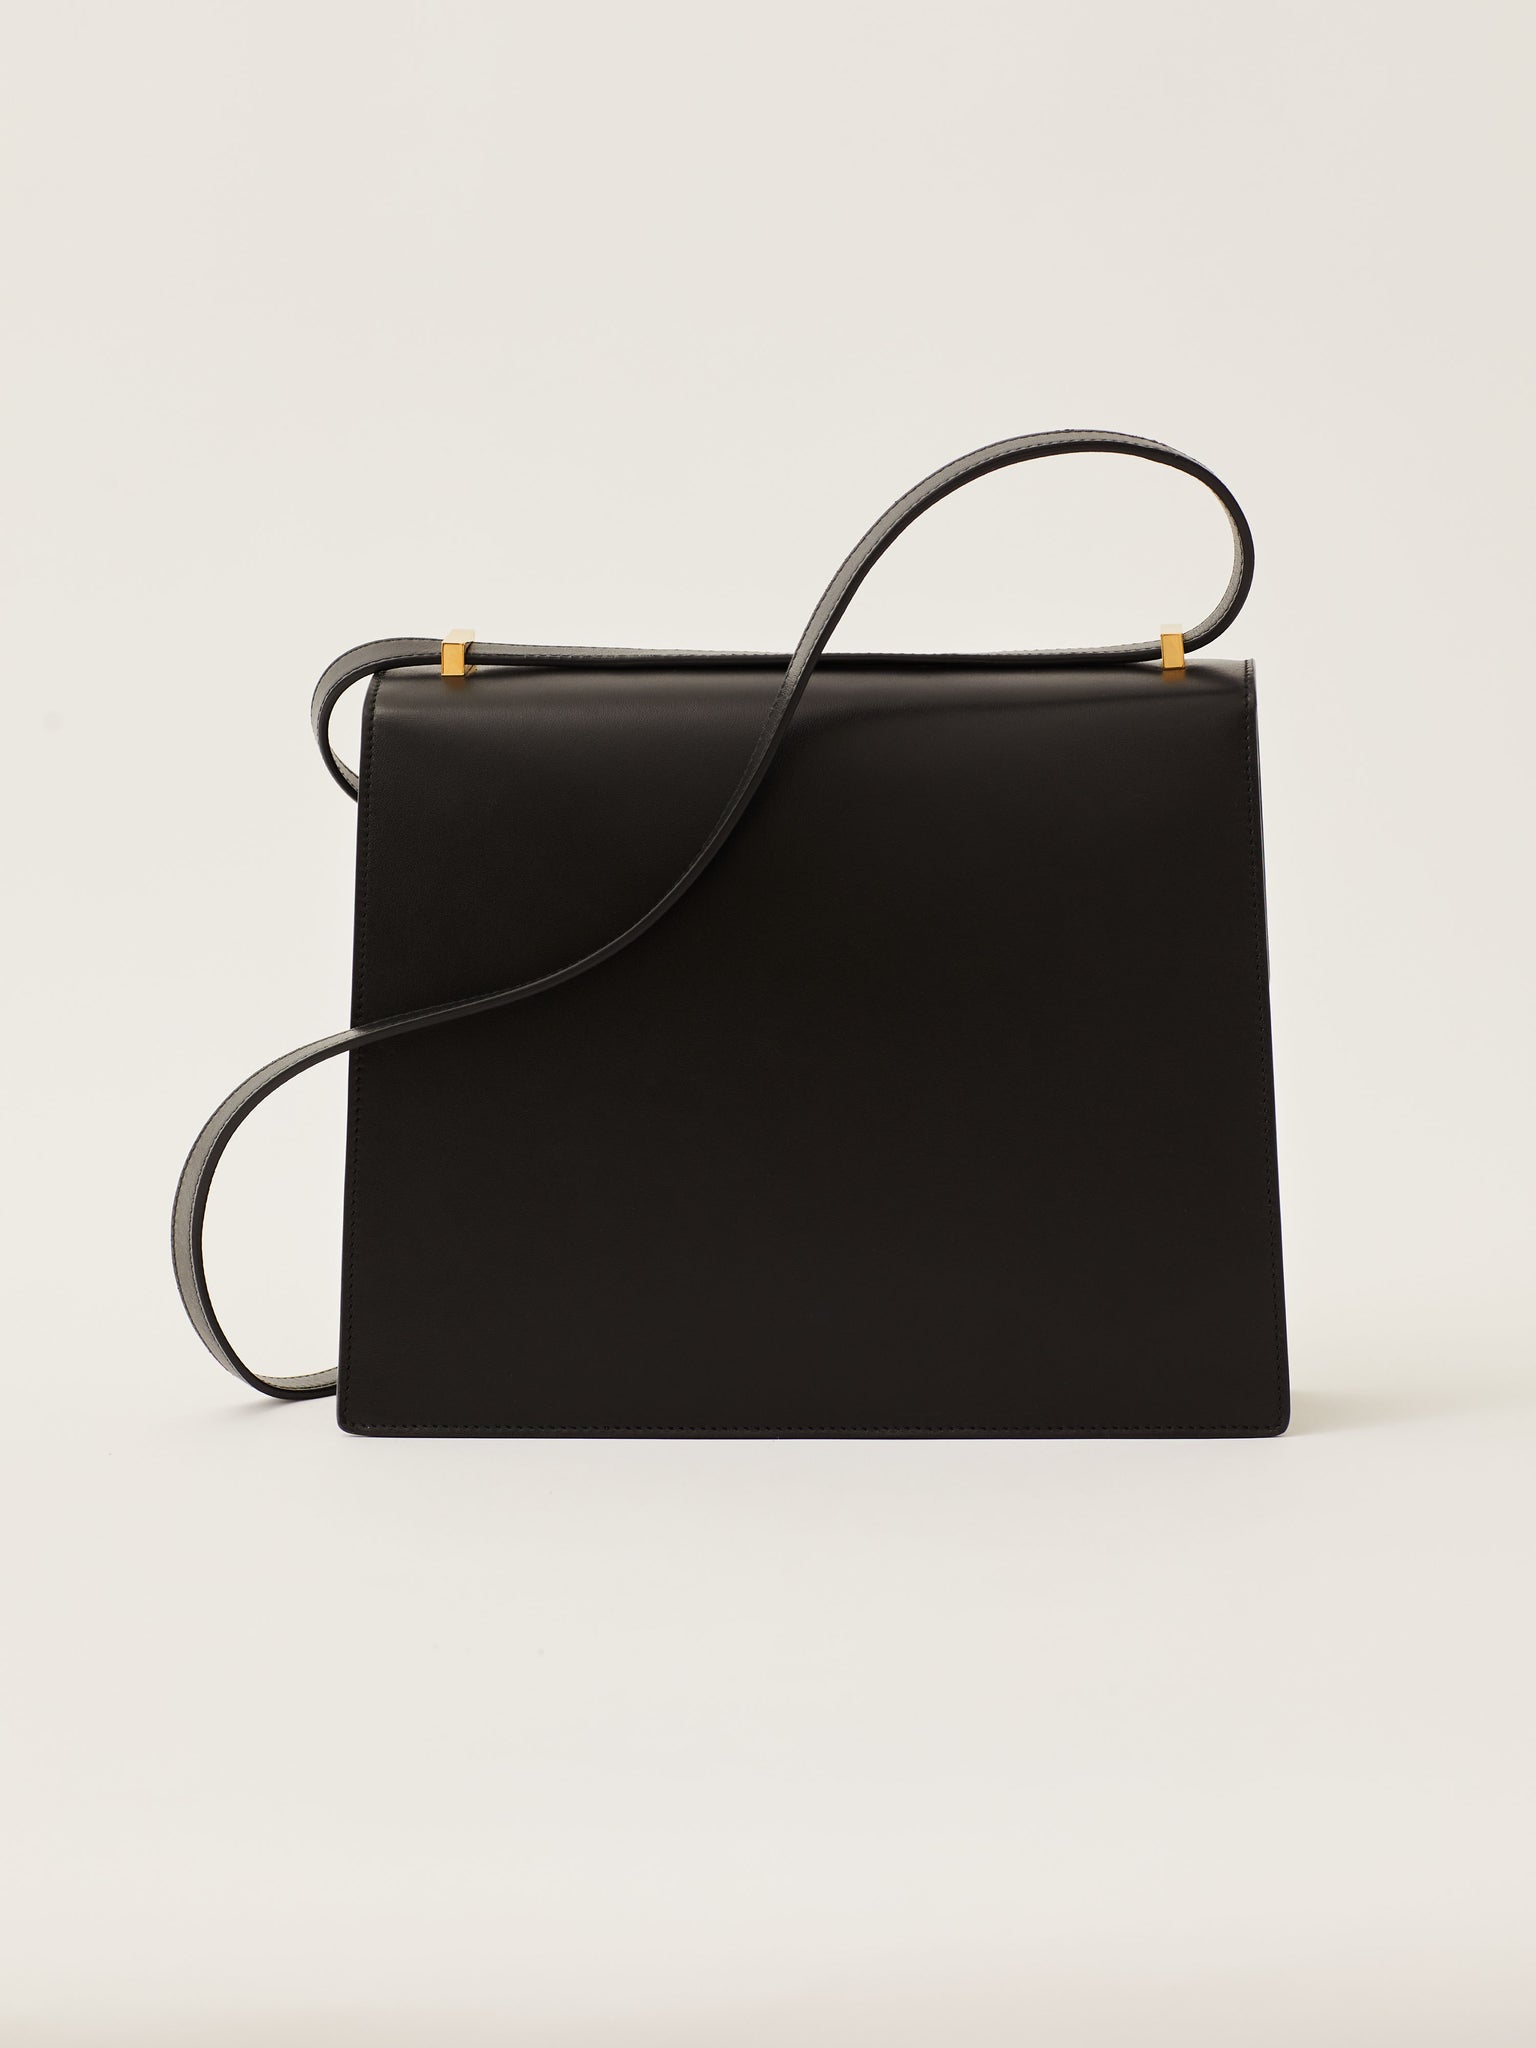 Objets Daso Black Leather Hye Handbag: Back View with Draped Shoulder Strap